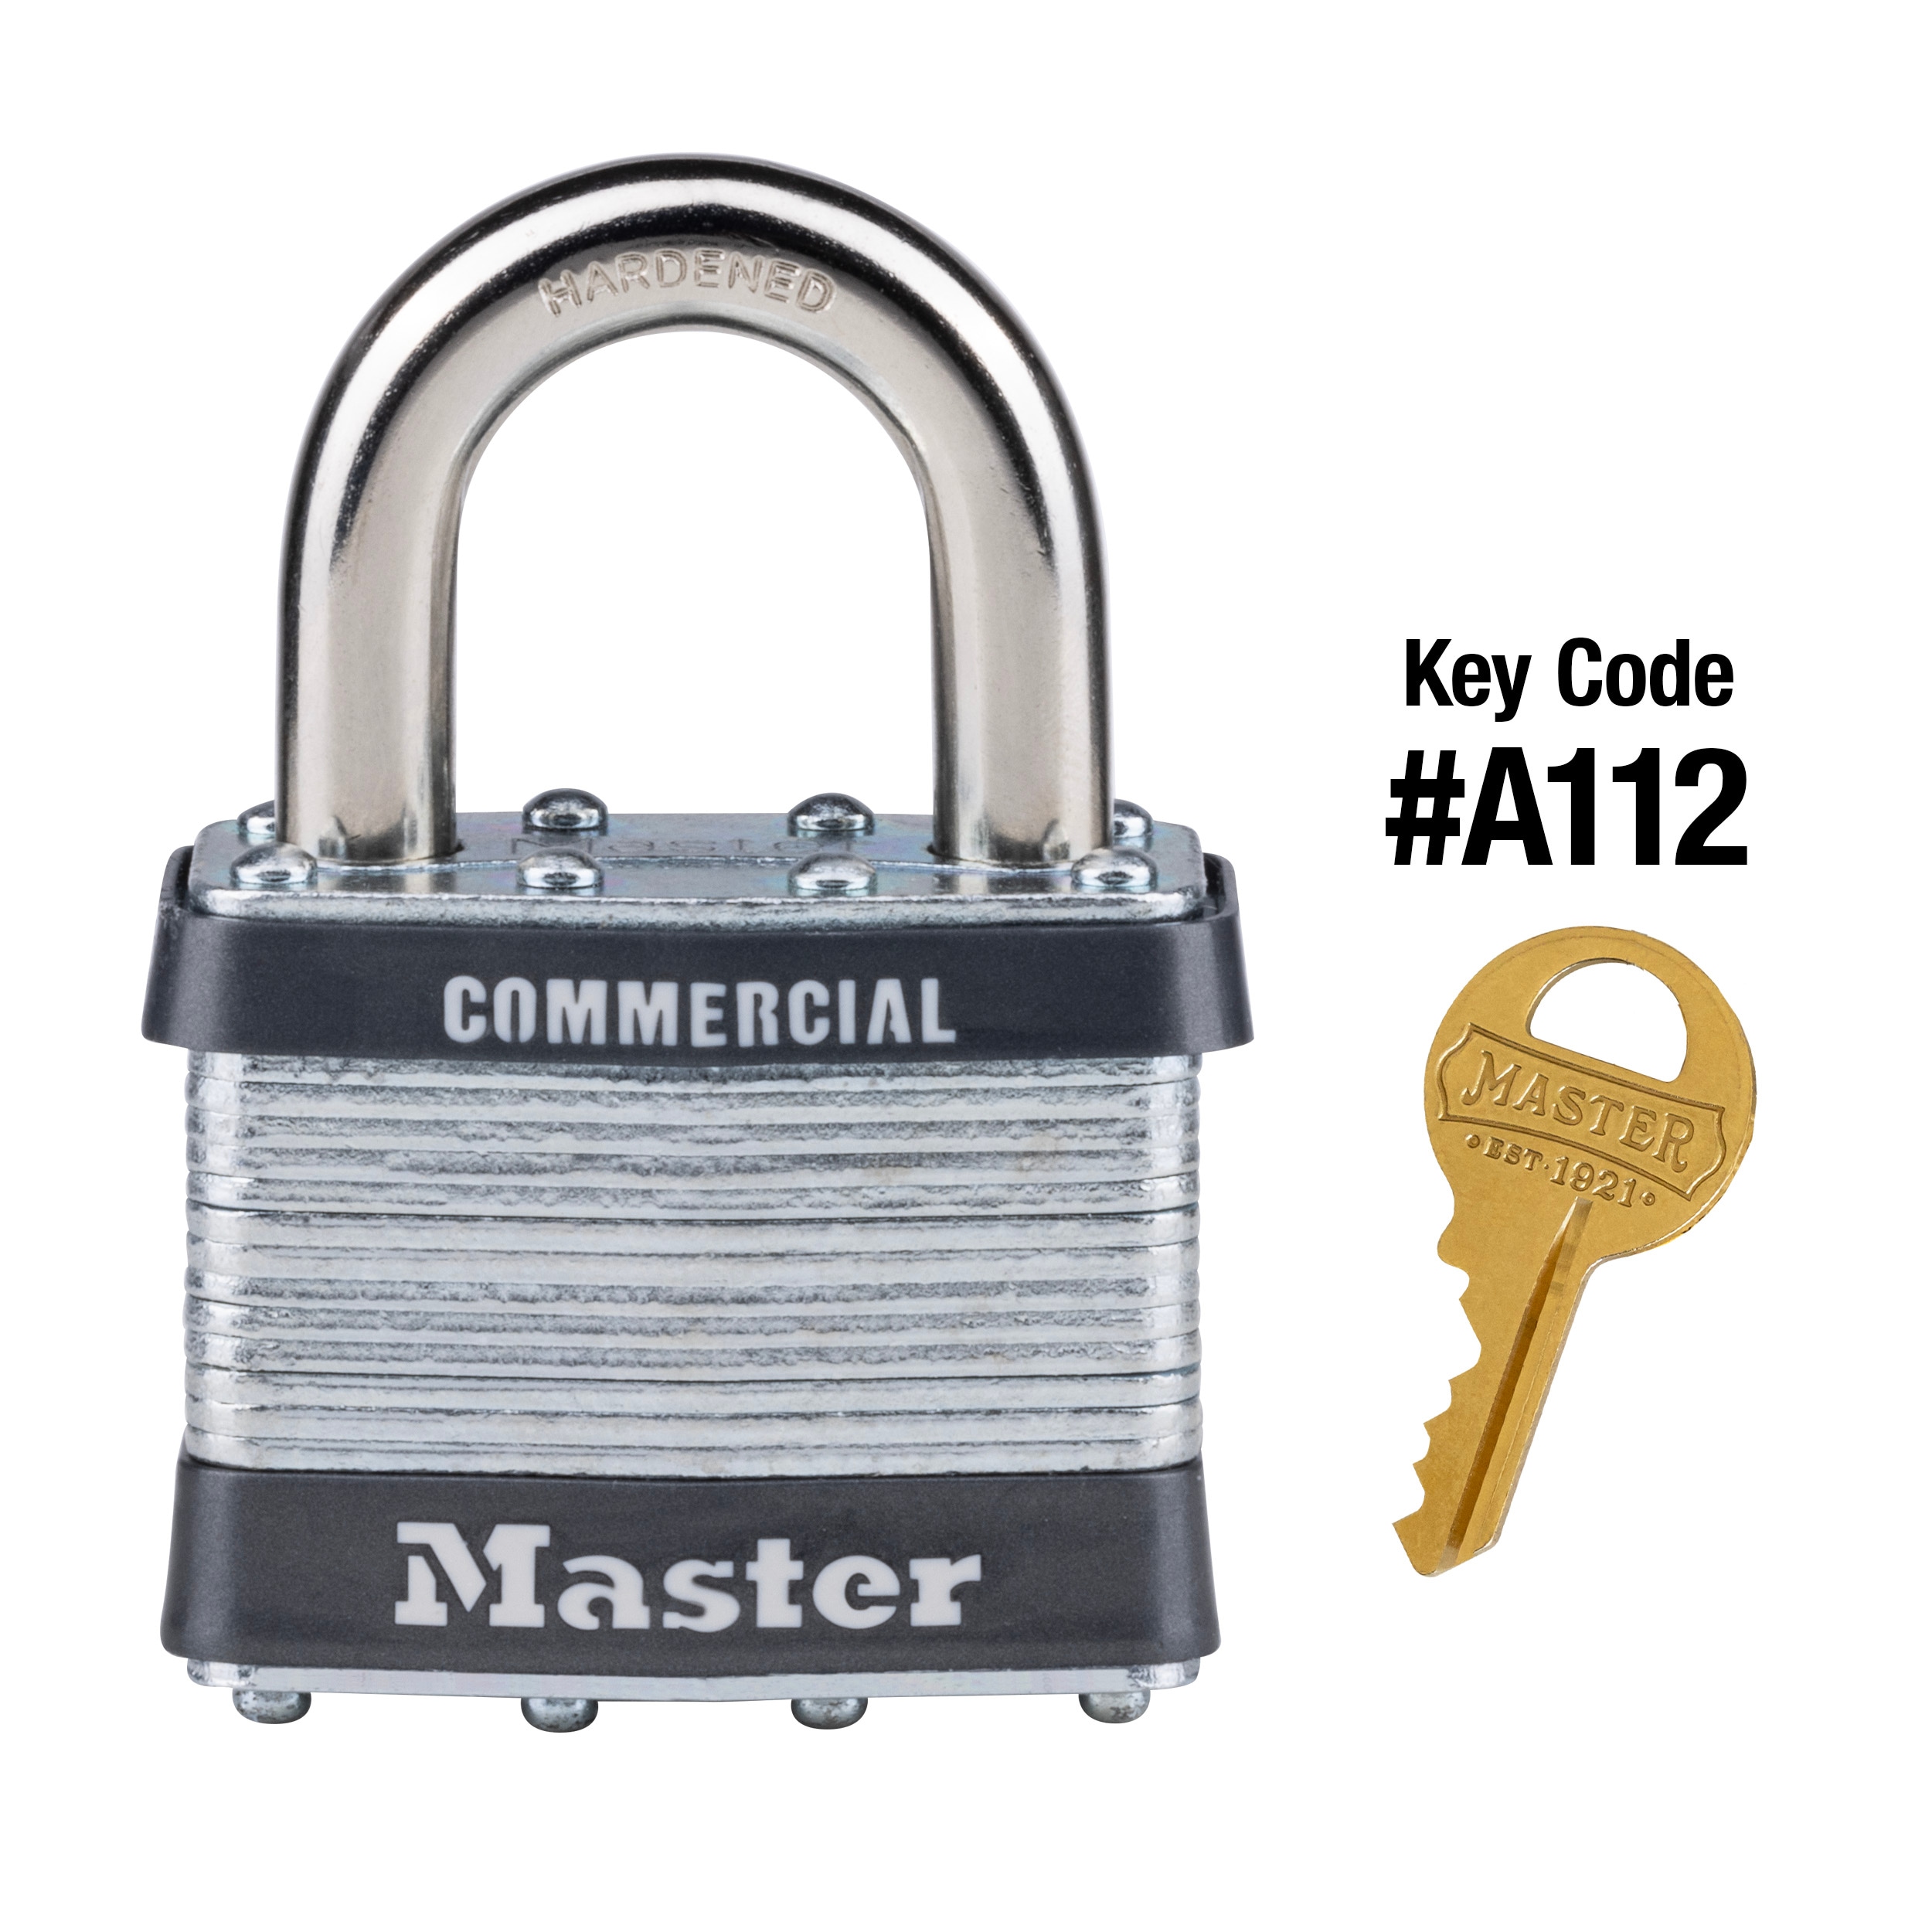 Master Lock Laminated Steel Large Padlock with 2 Keys – 2